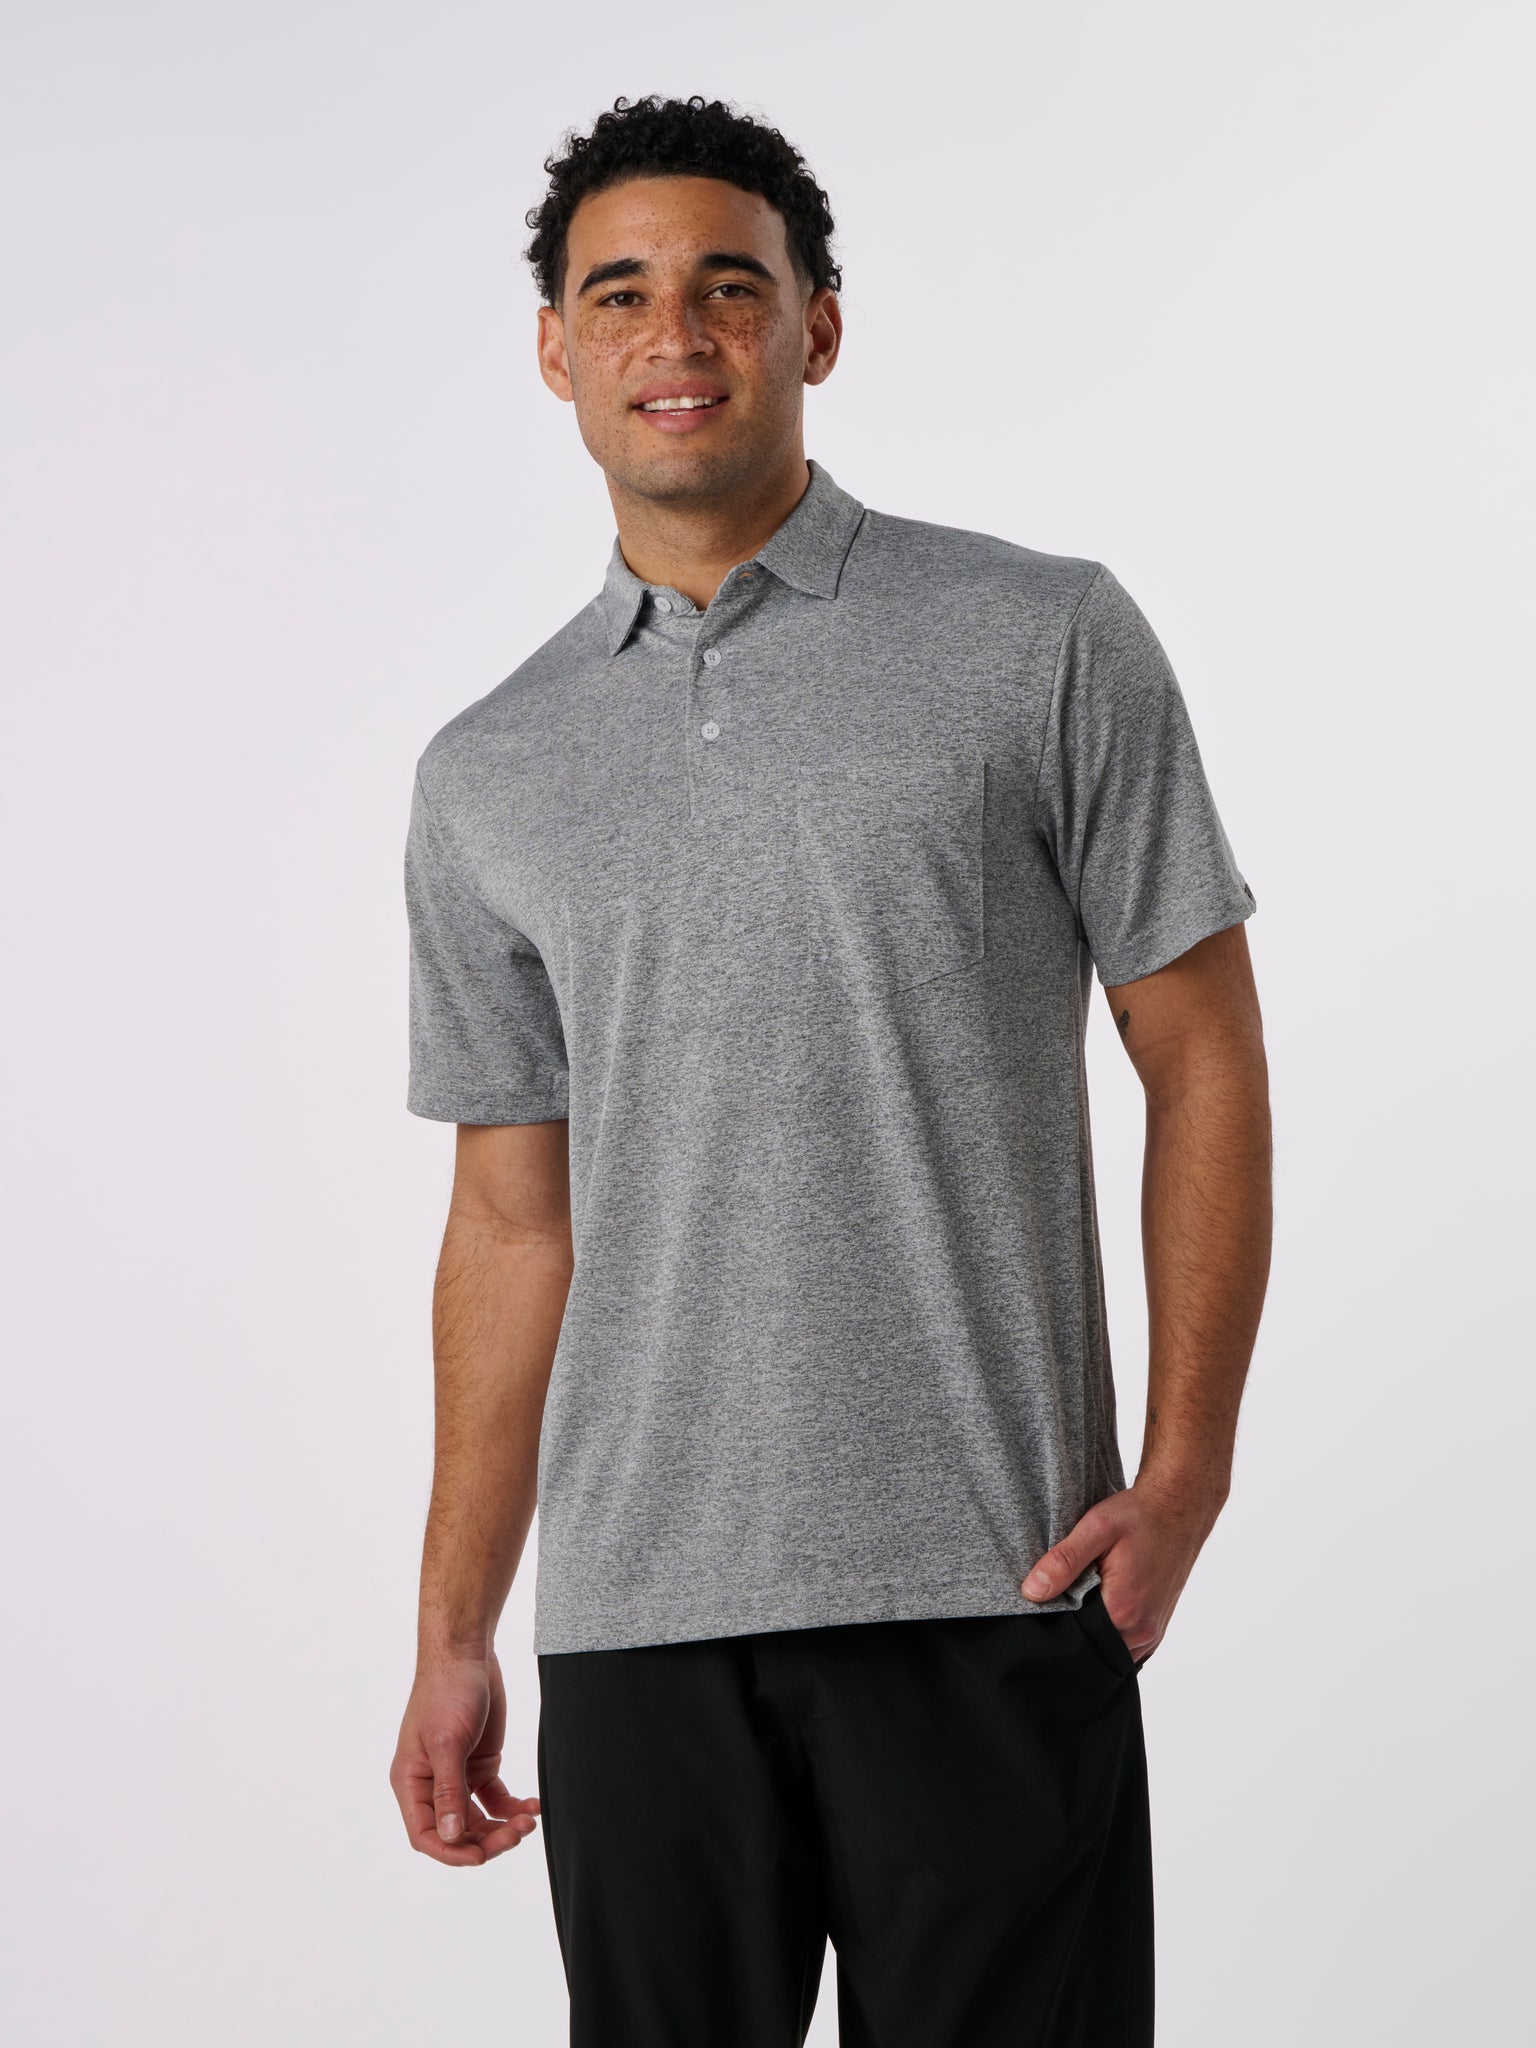 Men's Sustainable Polo Shirt, Eco-Friendly Golf Polo